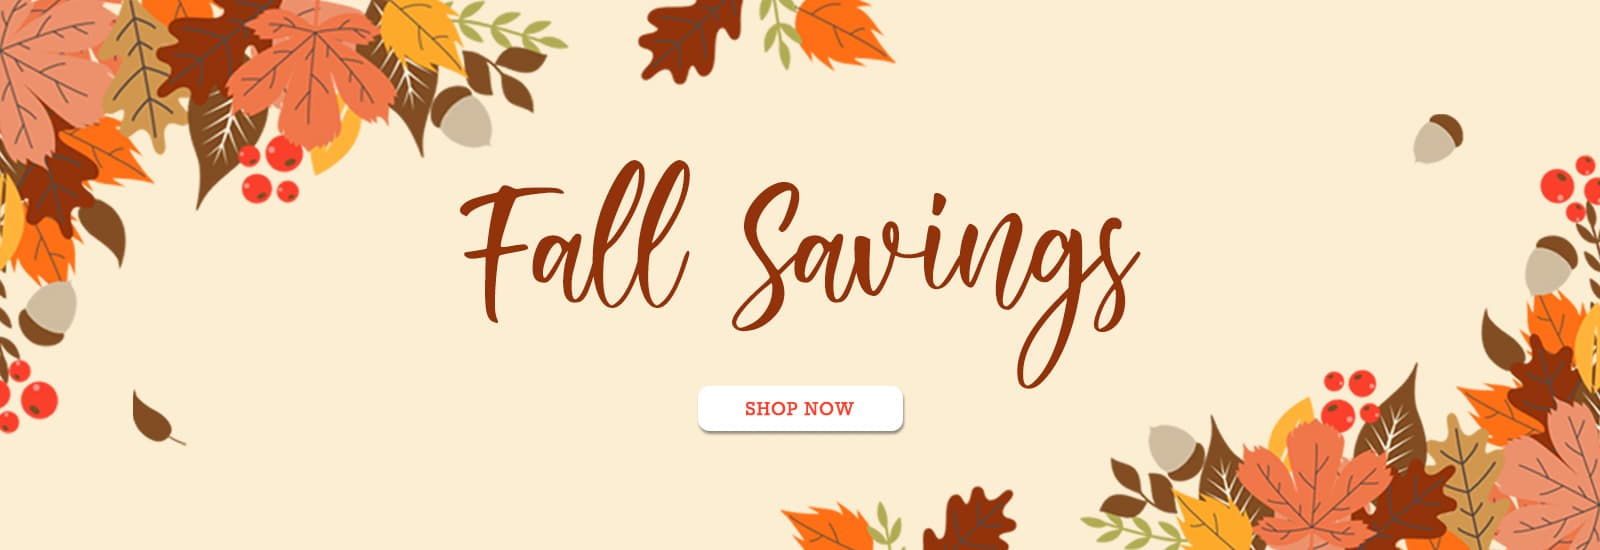 Fall Savings - Shop Now